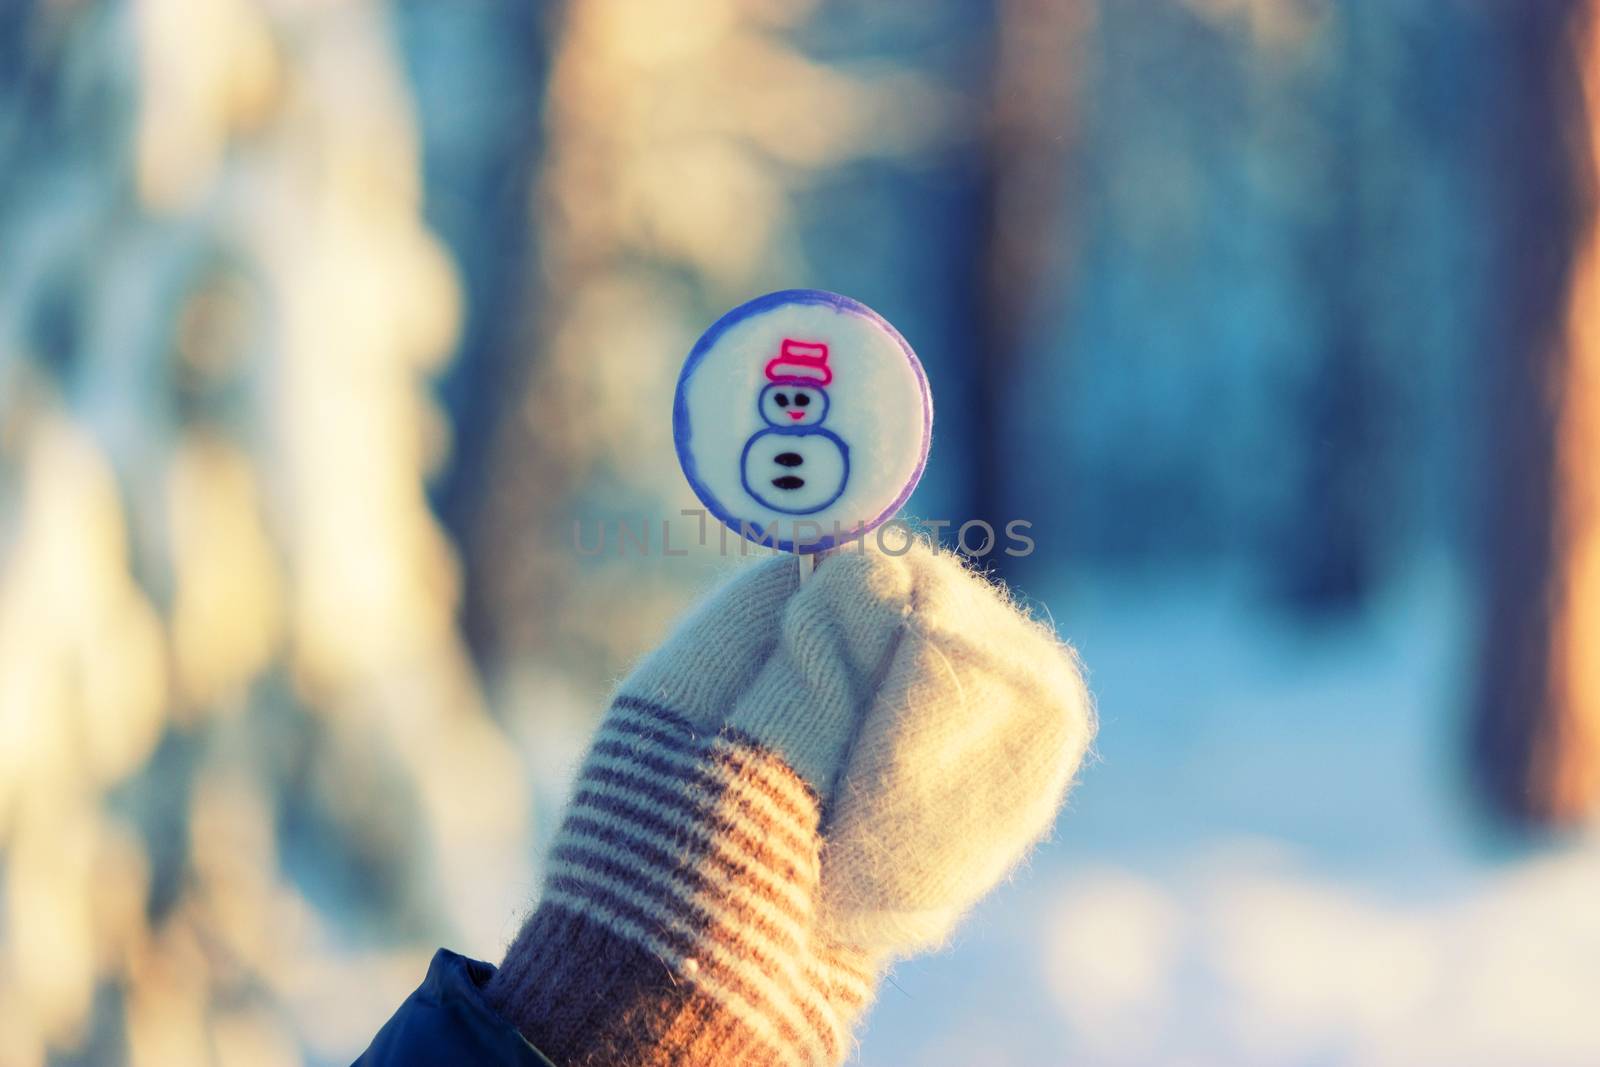 lollipop on stick in hand in mitten. snow background by liwei12